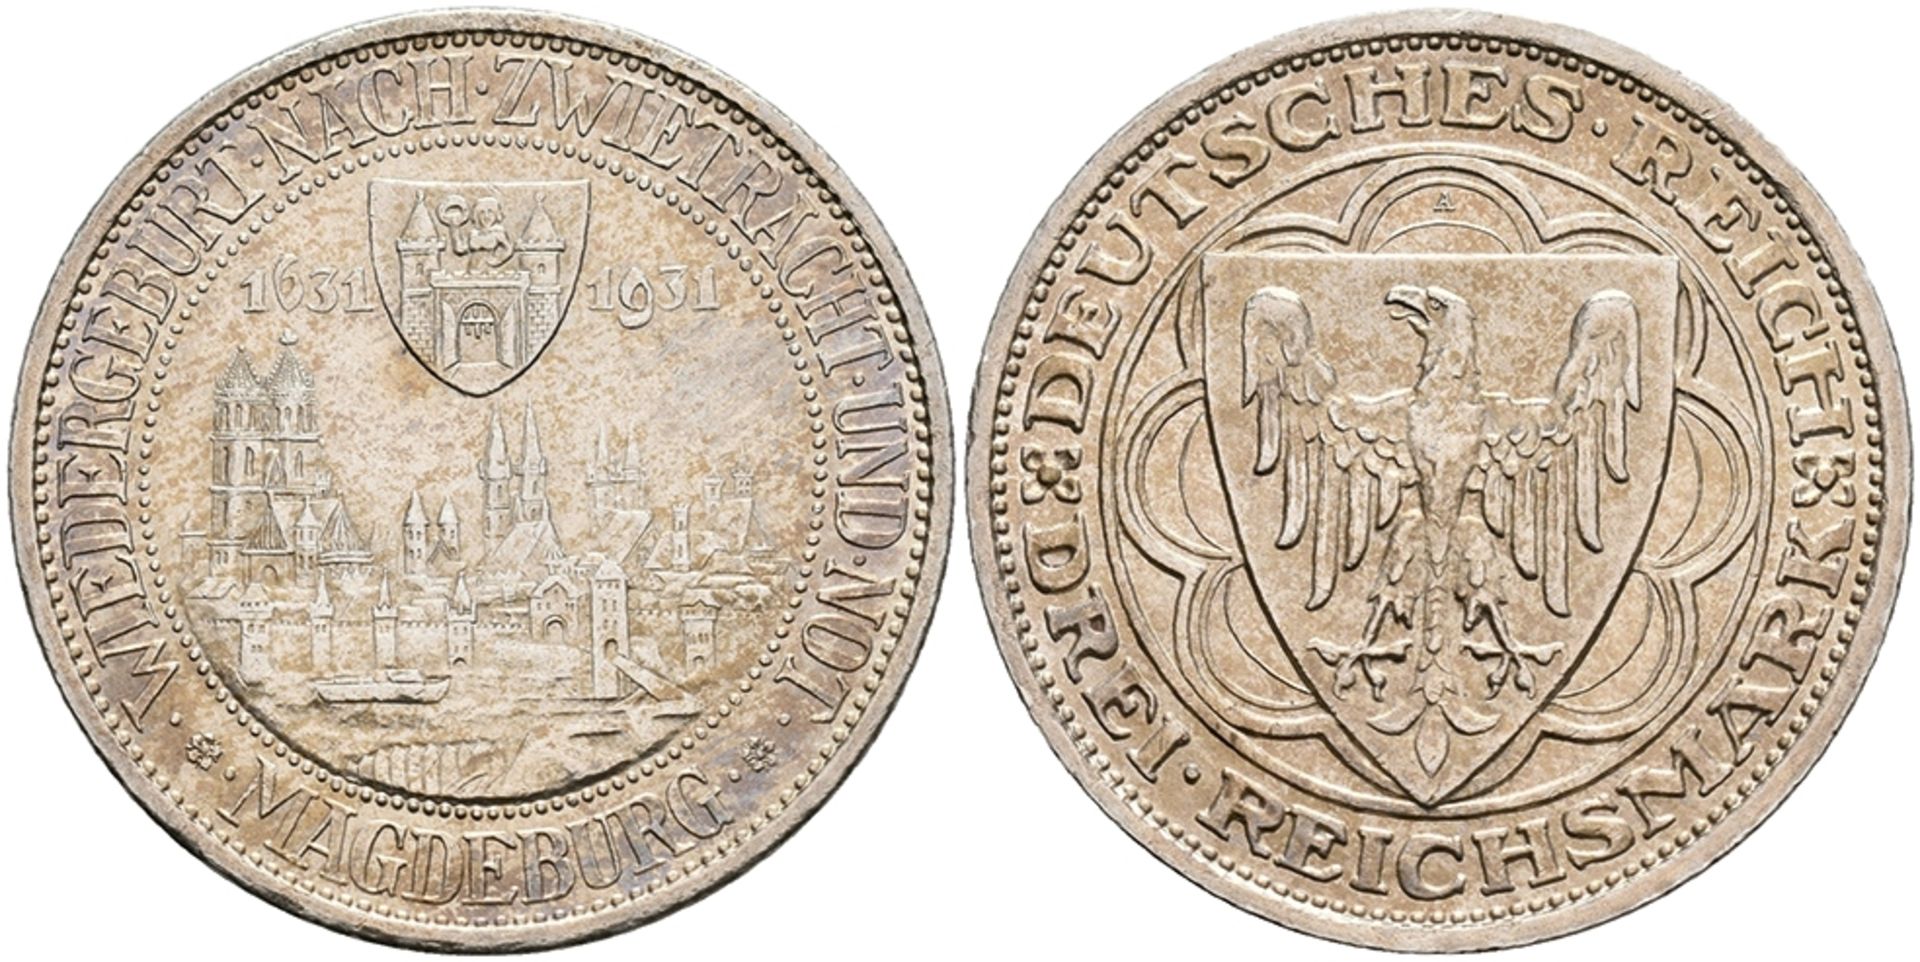 3 Reichsmark, 1931, Magdeburg, kl. Rf., vz. J. 347.